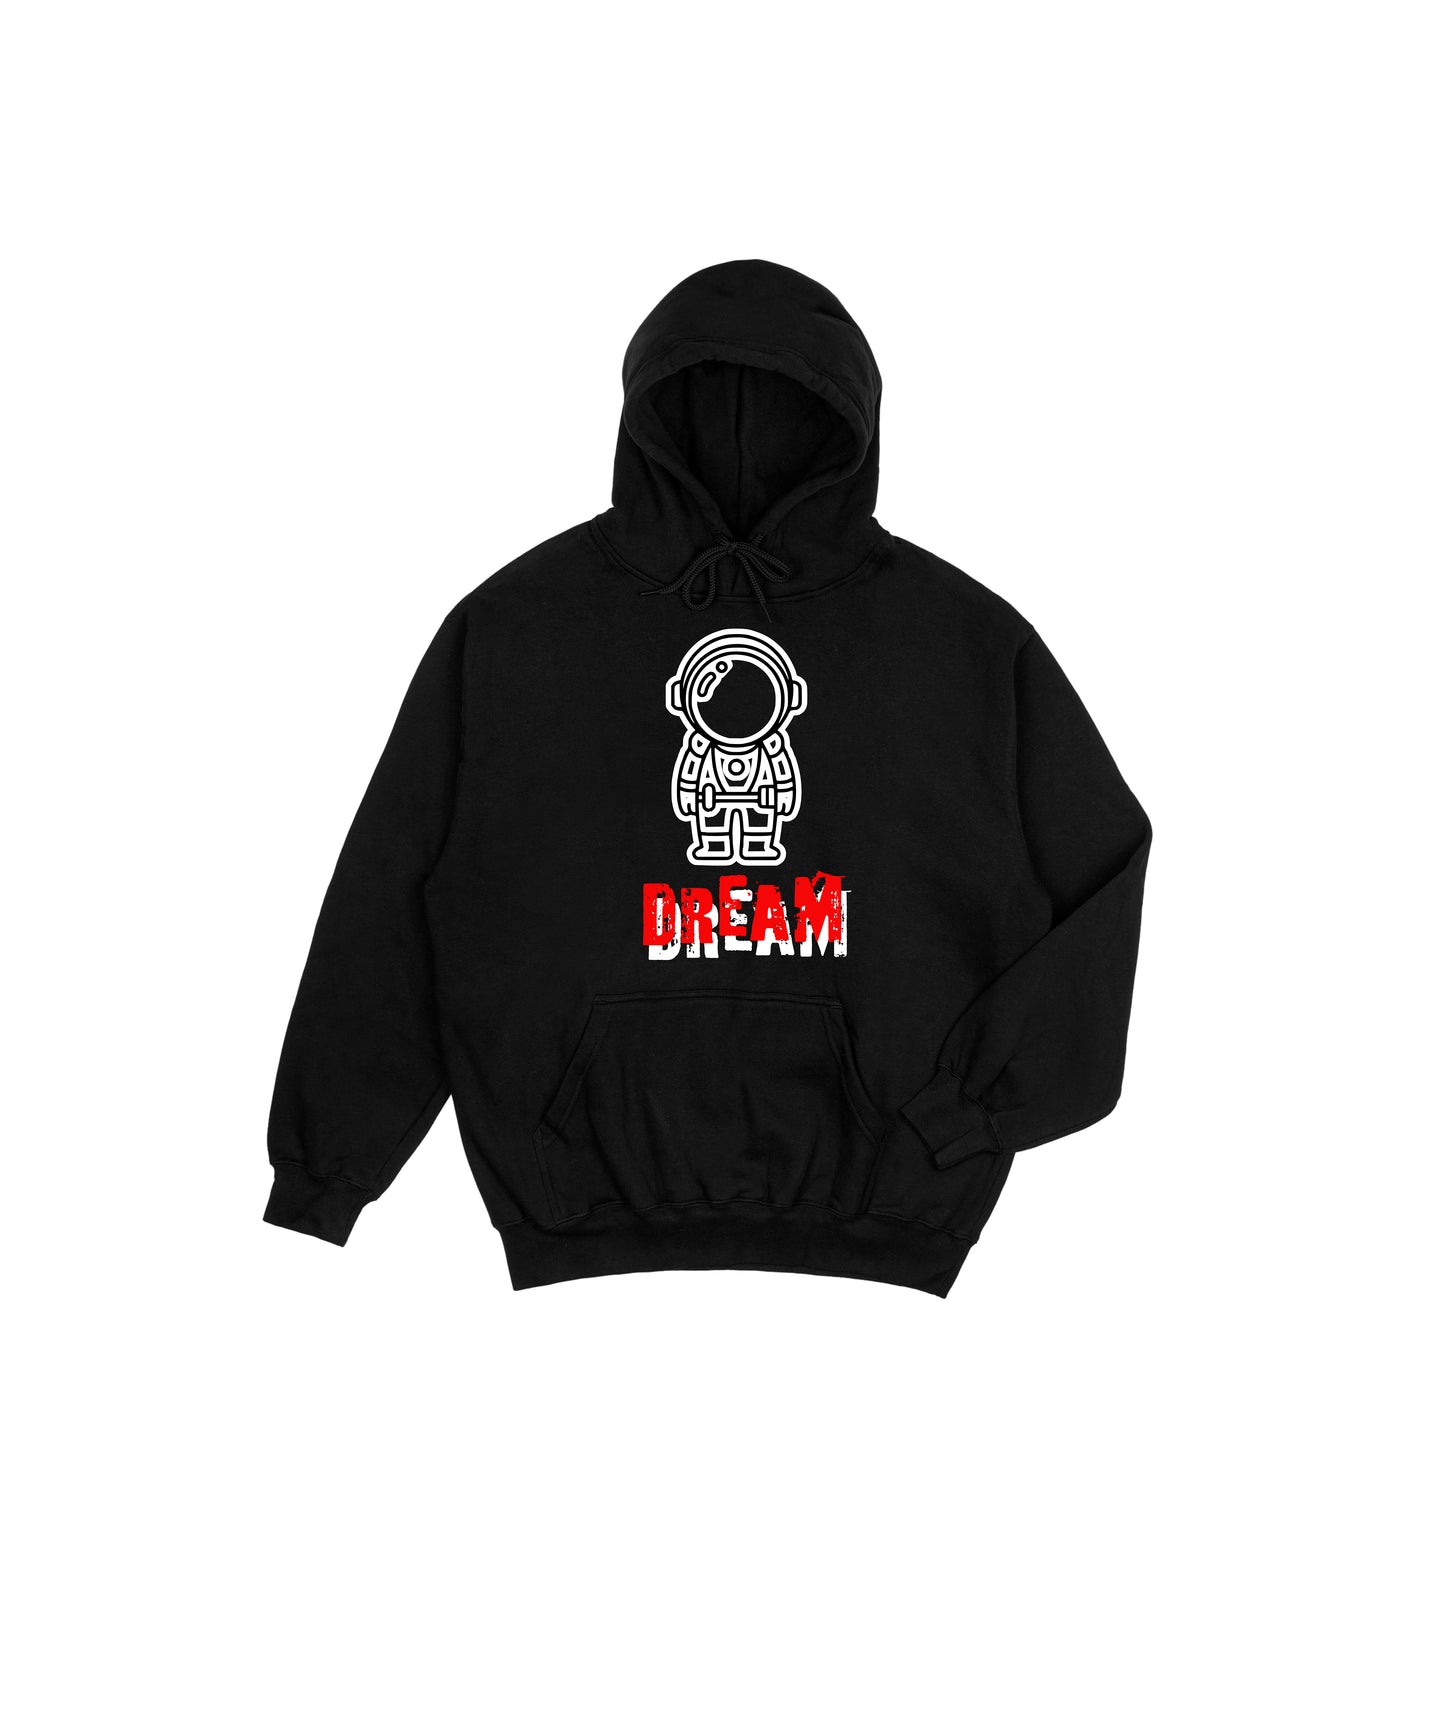 Astro dream hoodie (black)